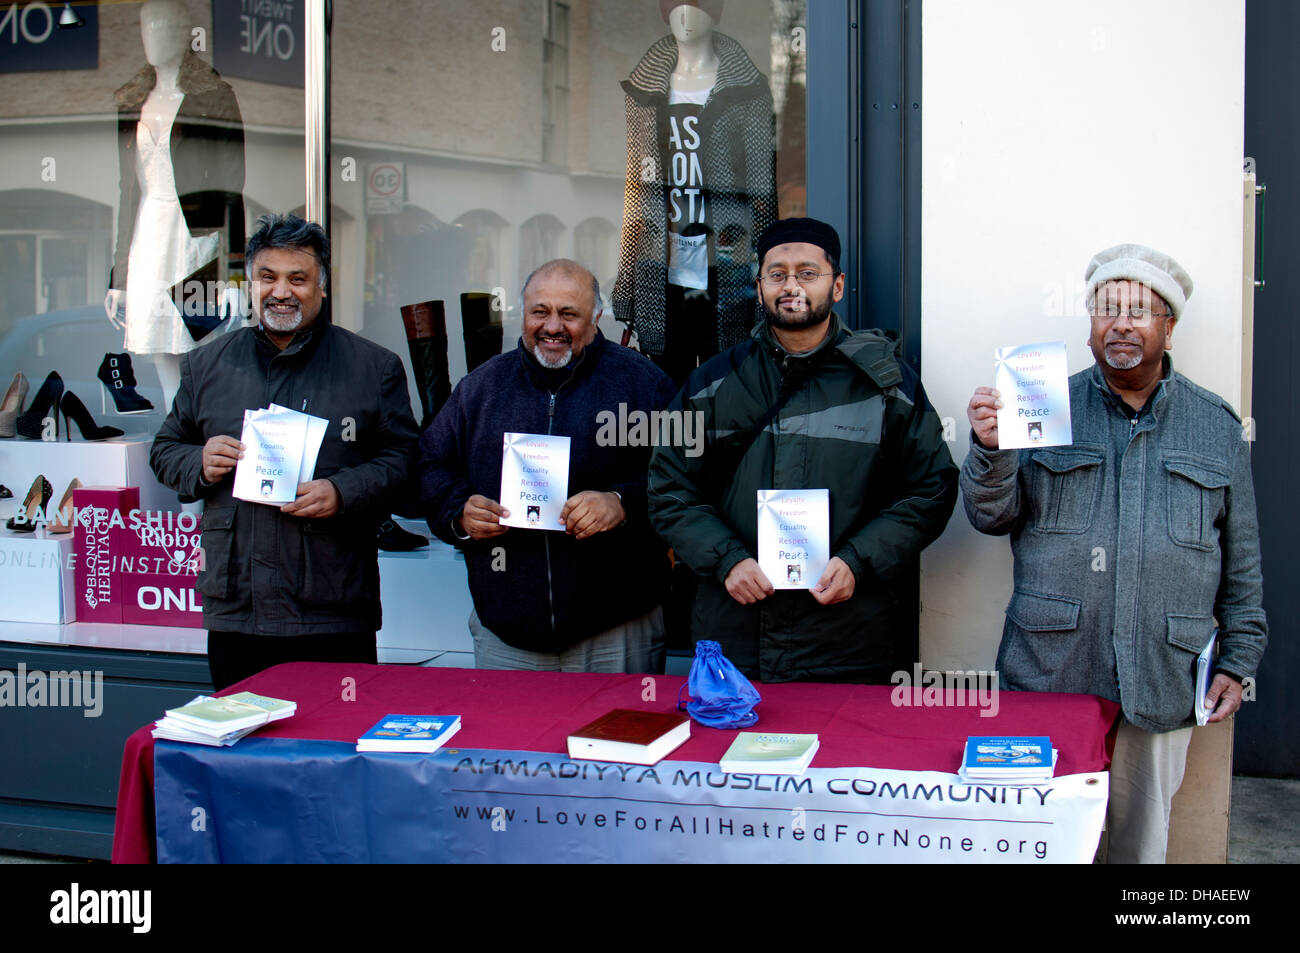 Ahmadiyya Muslim community stand, Leamington Spa, UK Stock Photo